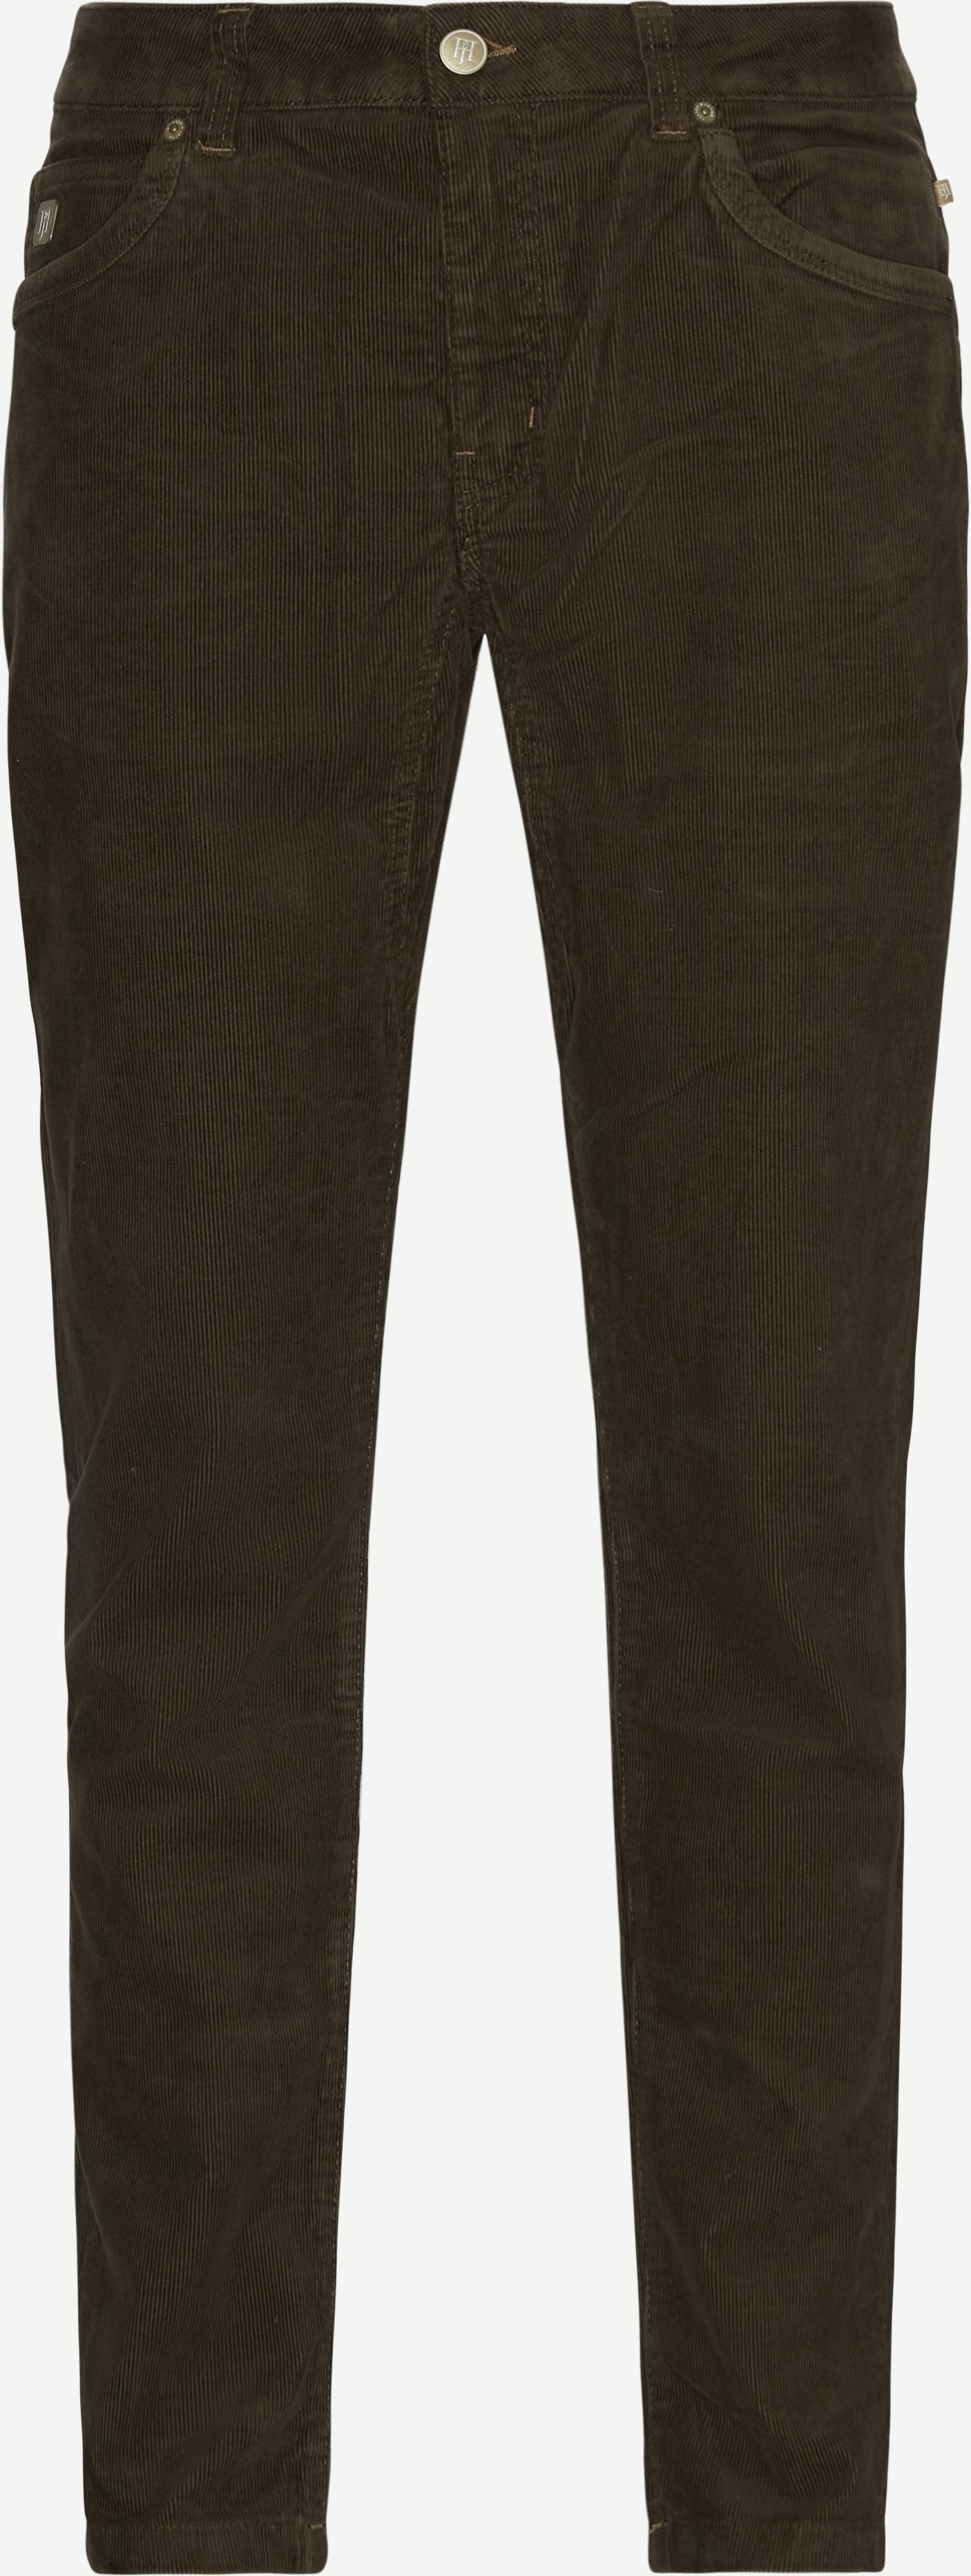 Jeans - Modern fit - Braun